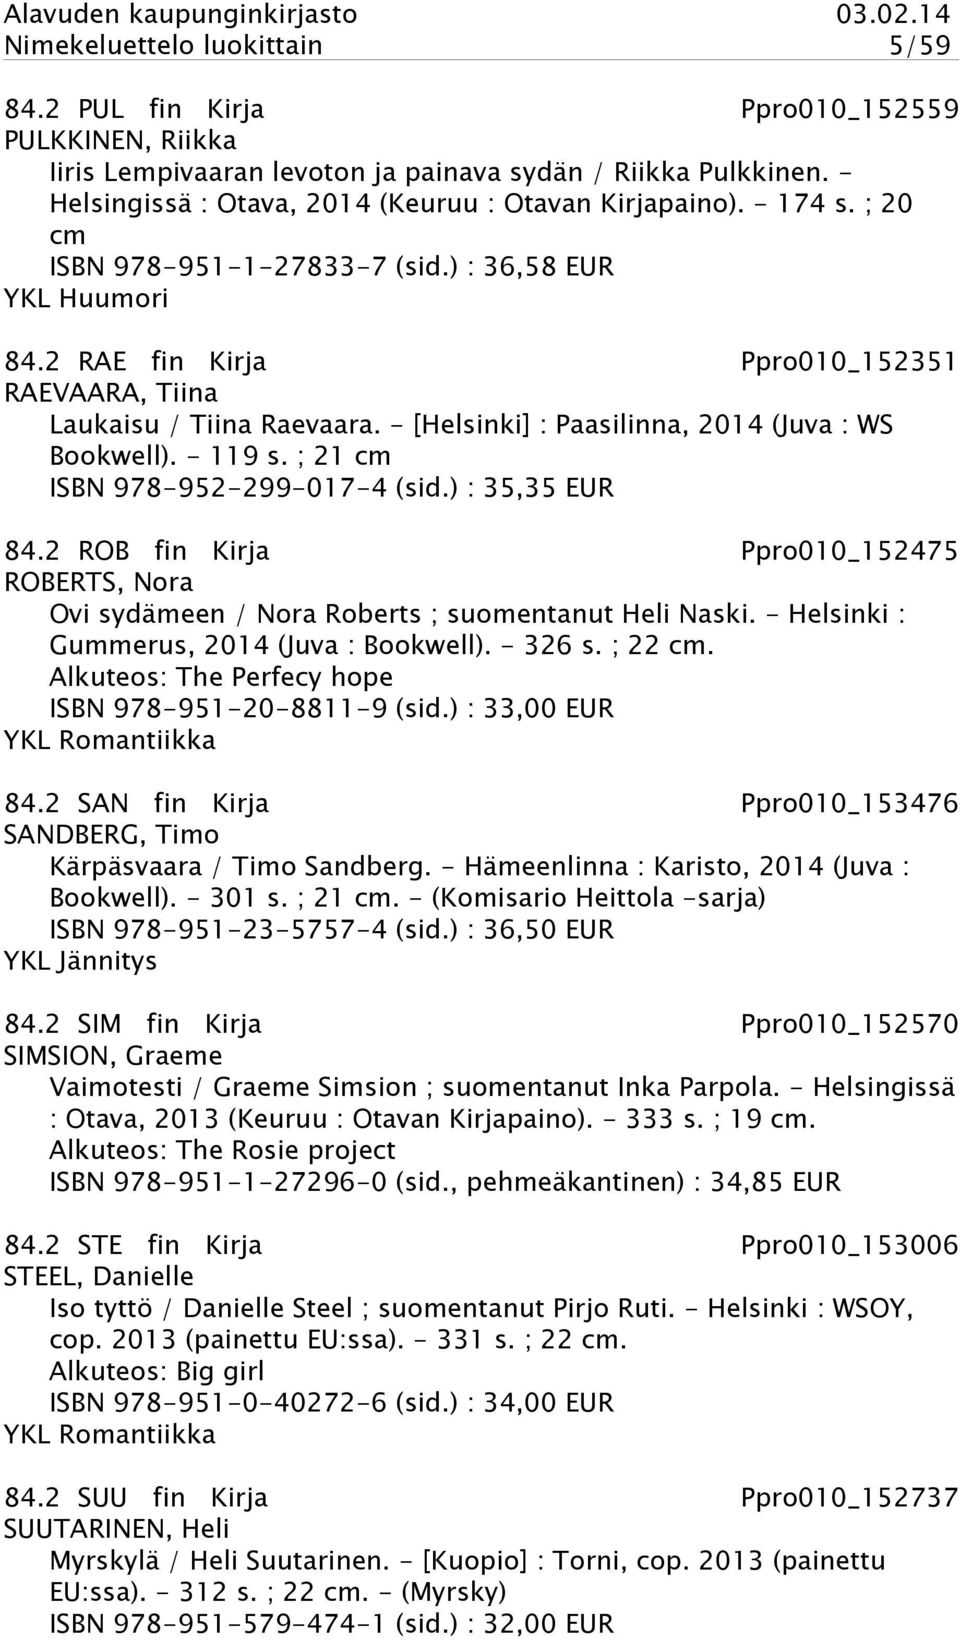 2 RAE fin Kirja Ppro010_152351 RAEVAARA, Tiina Laukaisu / Tiina Raevaara. - [Helsinki] : Paasilinna, 2014 (Juva : WS Bookwell). - 119 s. ; 21 cm ISBN 978-952-299-017-4 (sid.) : 35,35 EUR 84.